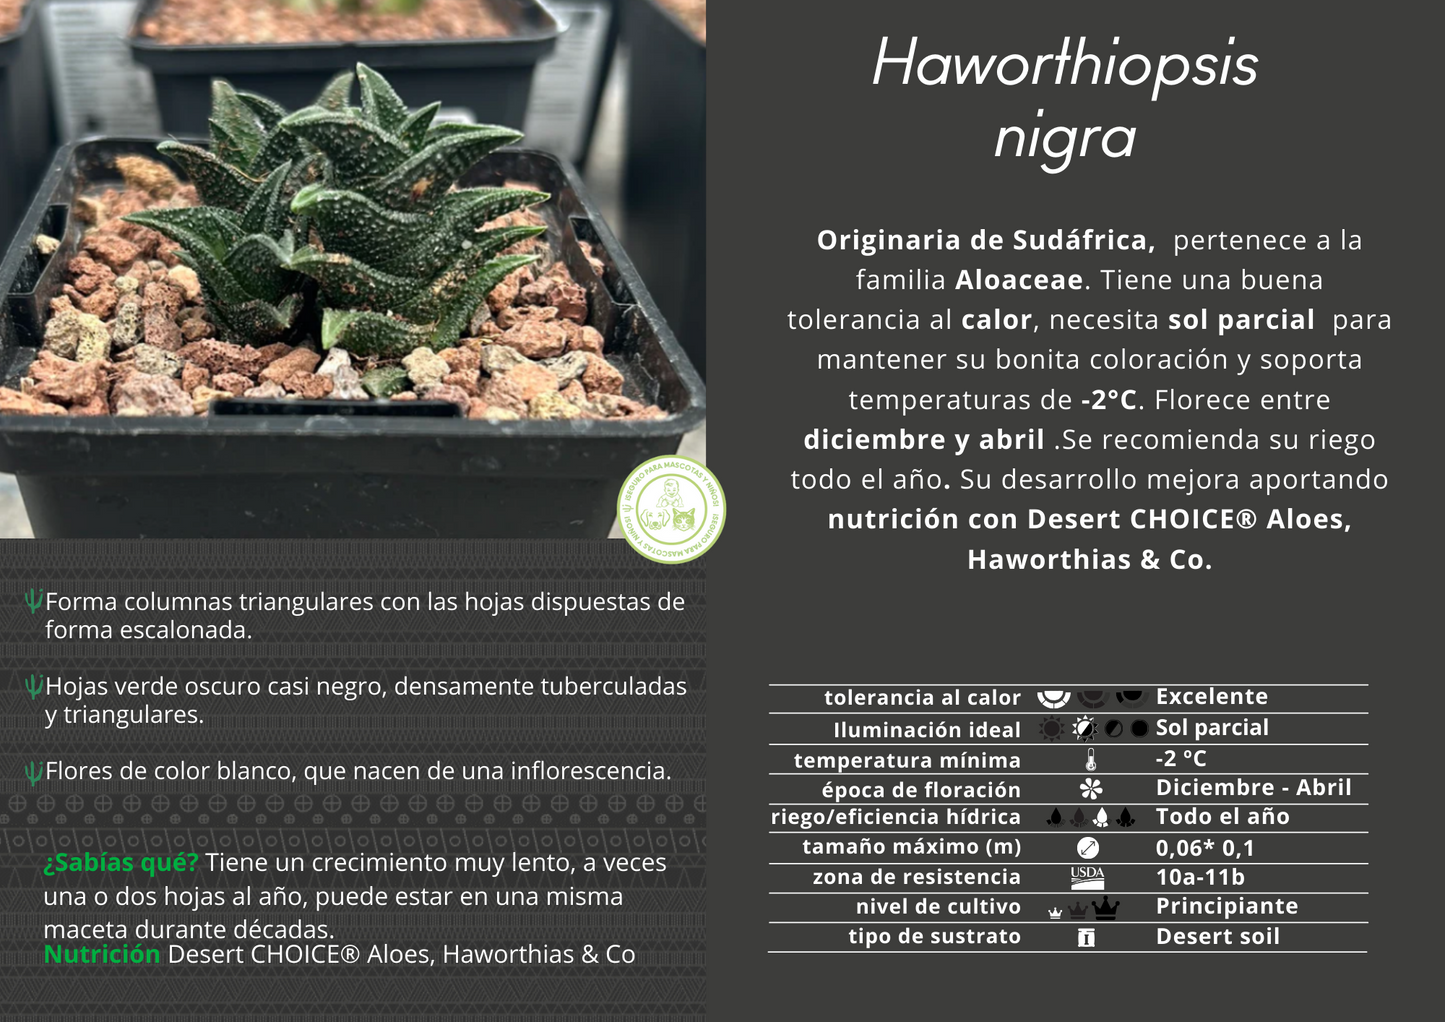 Haworthiopsis nigra